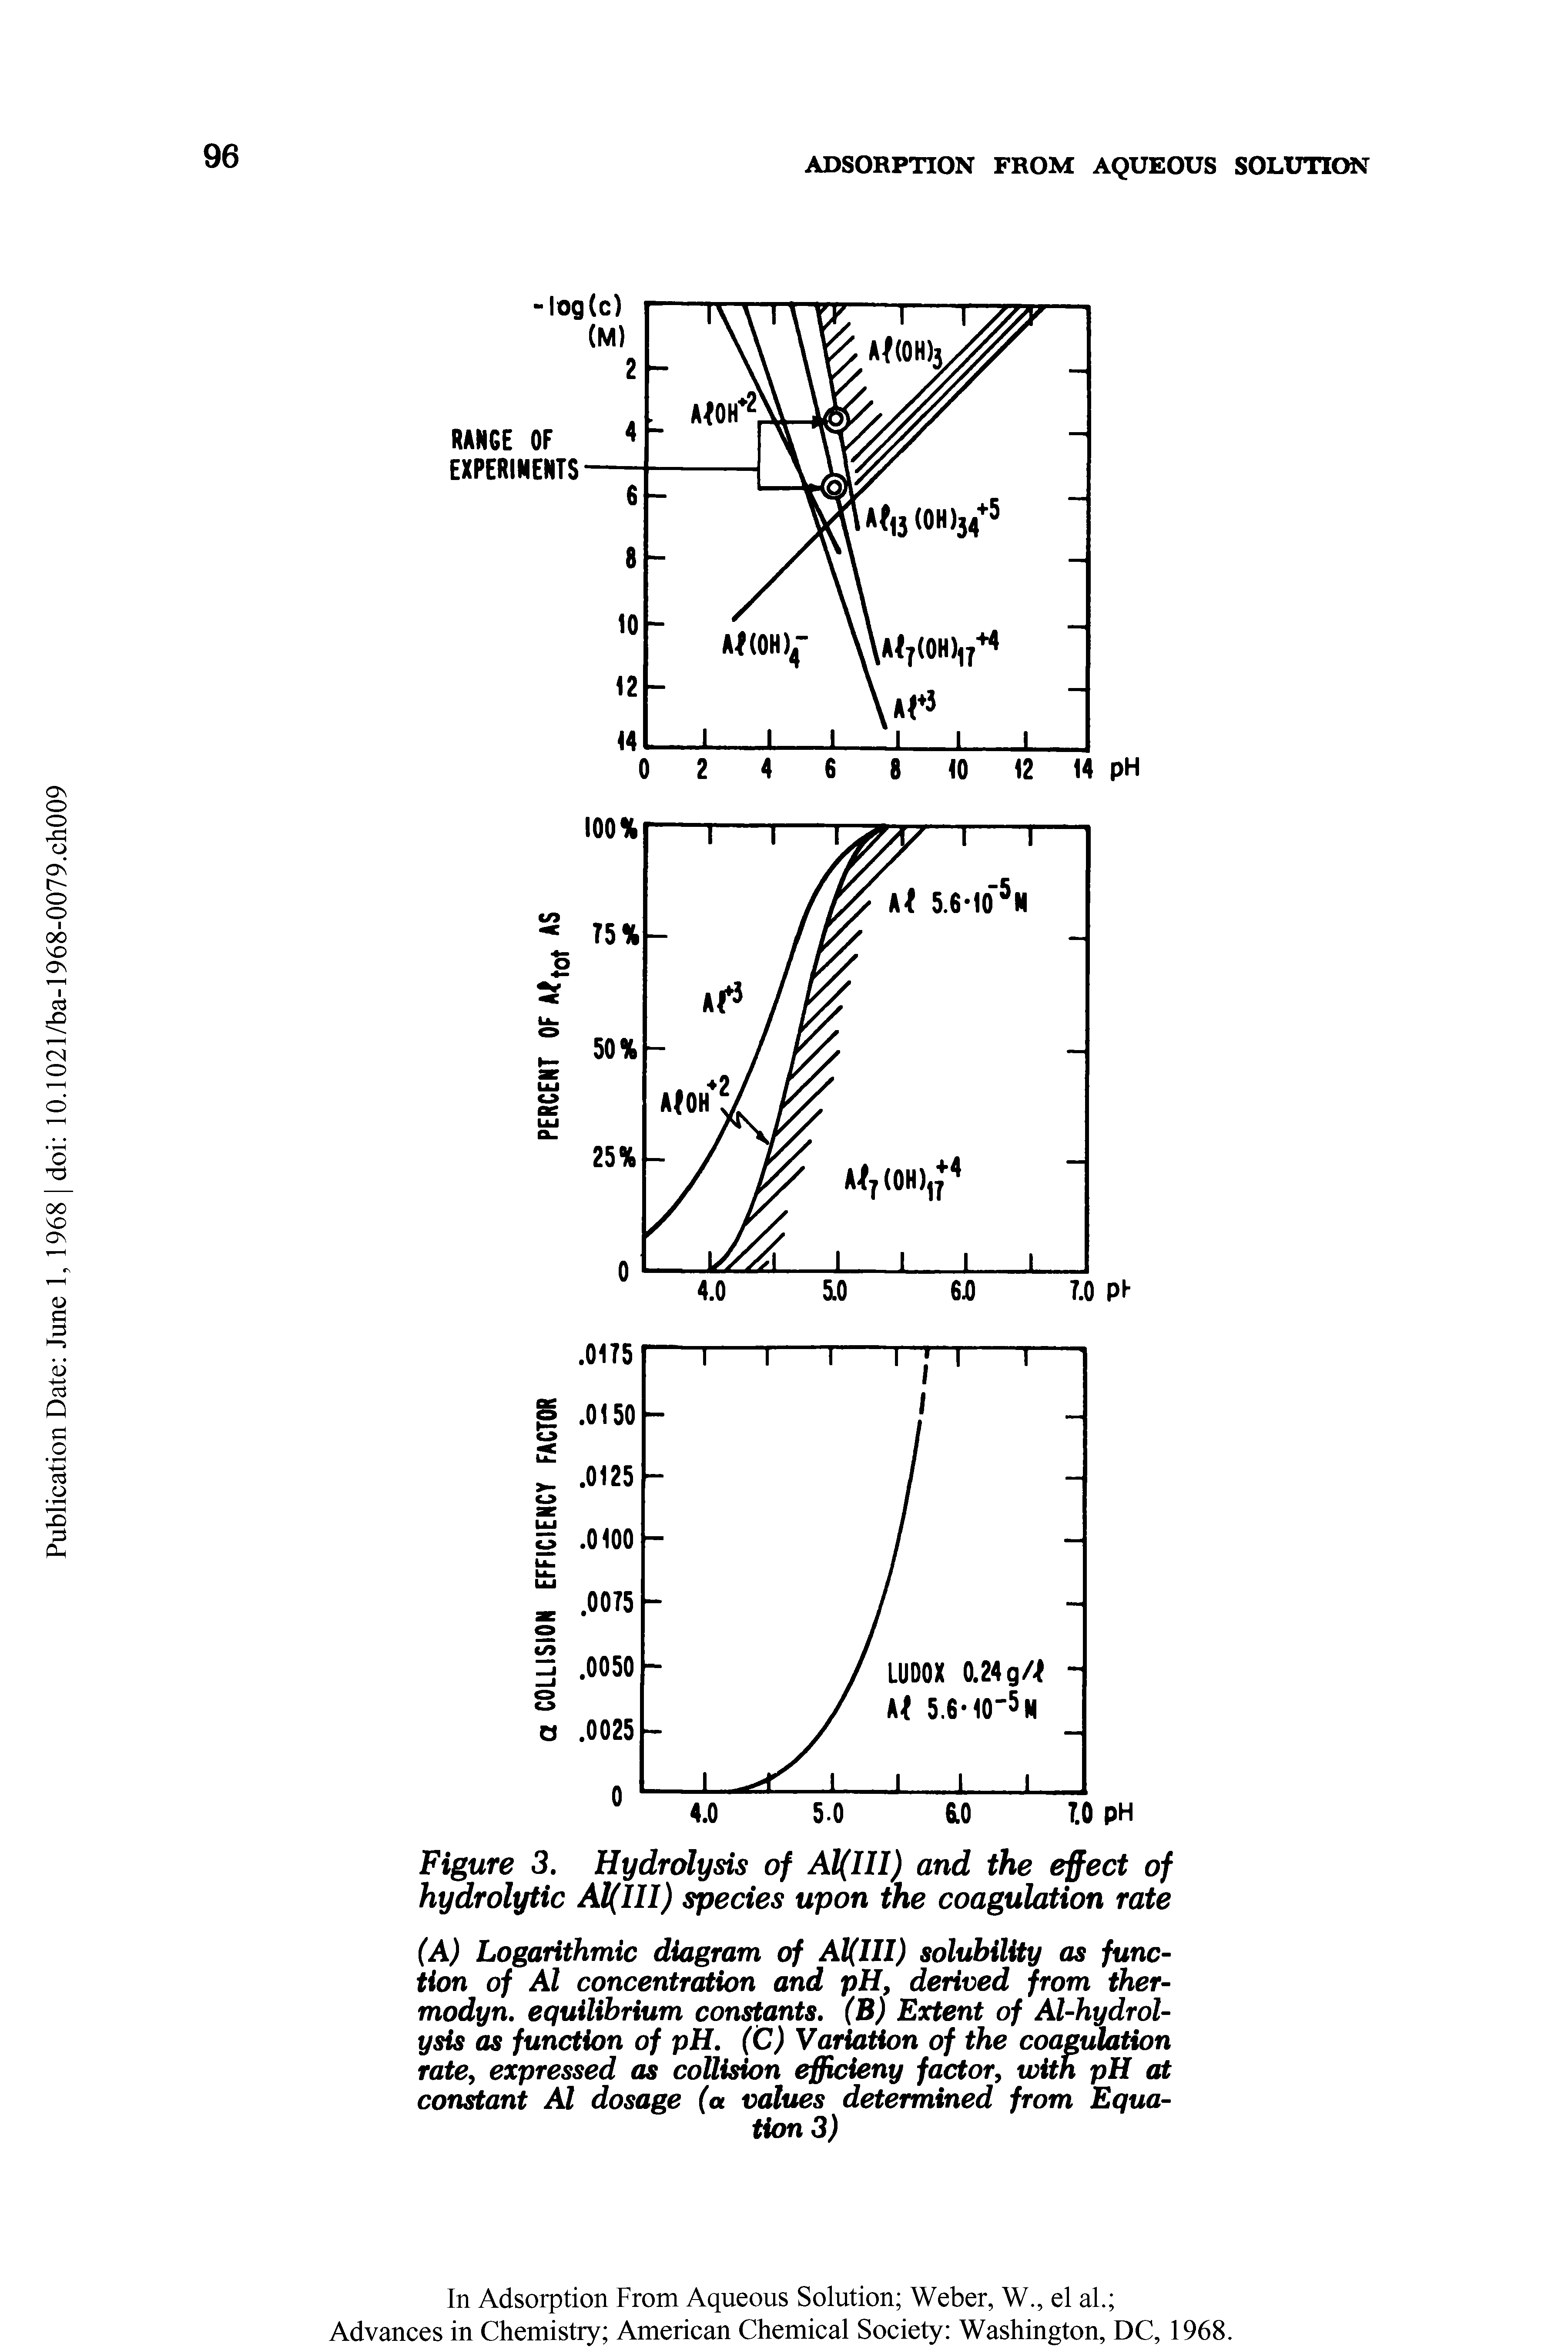 Figure 3. Hydrolysis of Al(IU) and the effect of hydrolytic Al(III) species upon the coagulation rate...